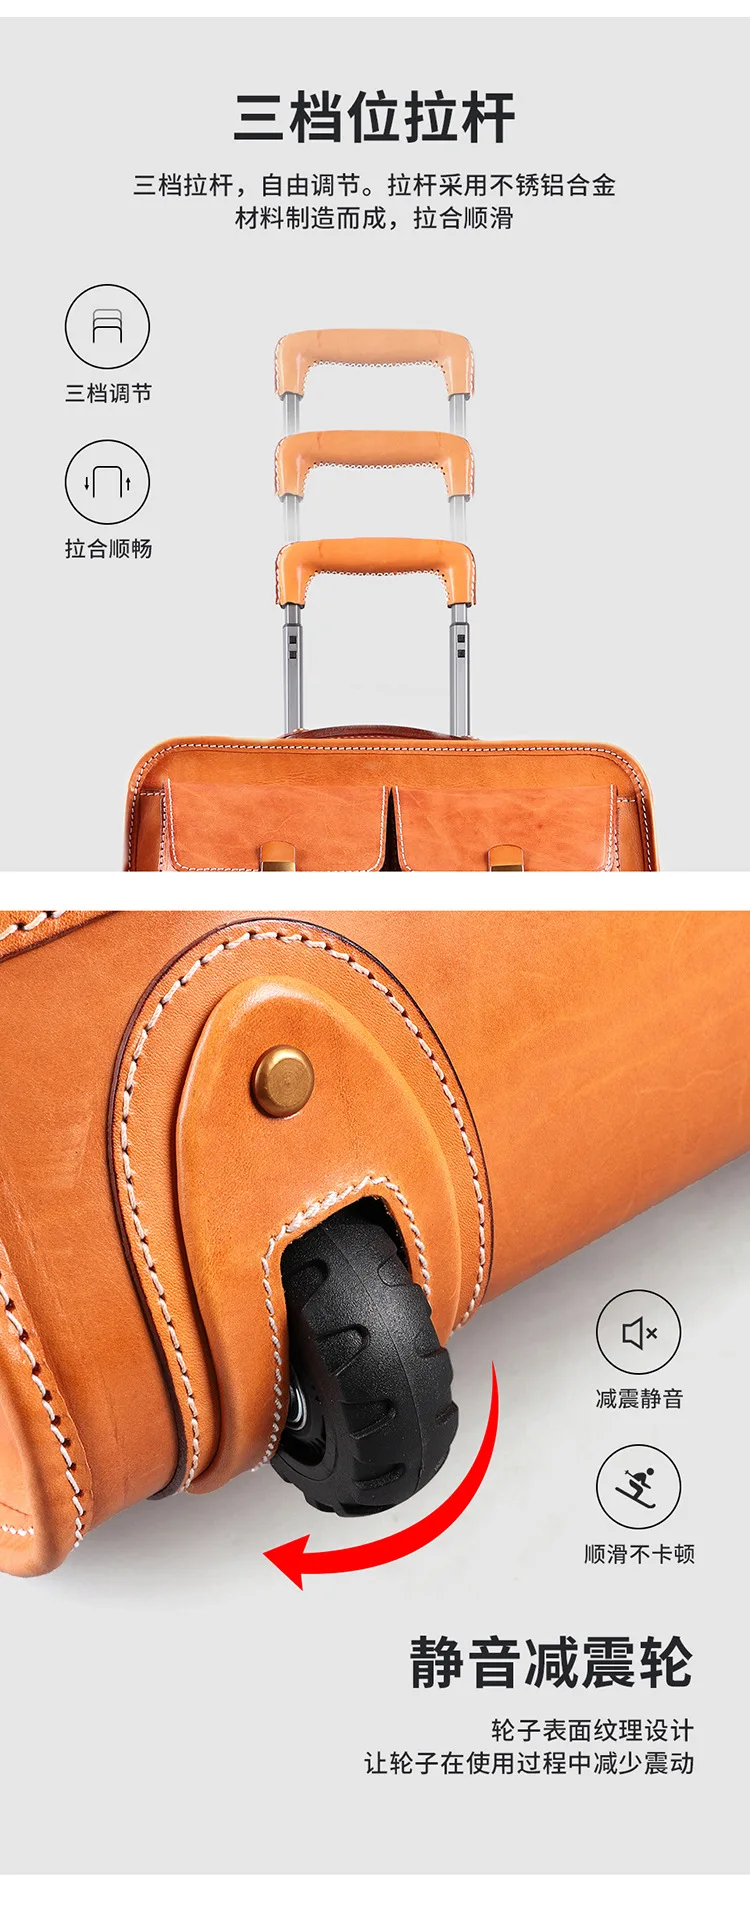 Skeleton-Skin Handmade Genuine Leather Suitcase 22-Inch Boarding Machine Trolley Case Multi-Functional Fashion Universal Wheel L